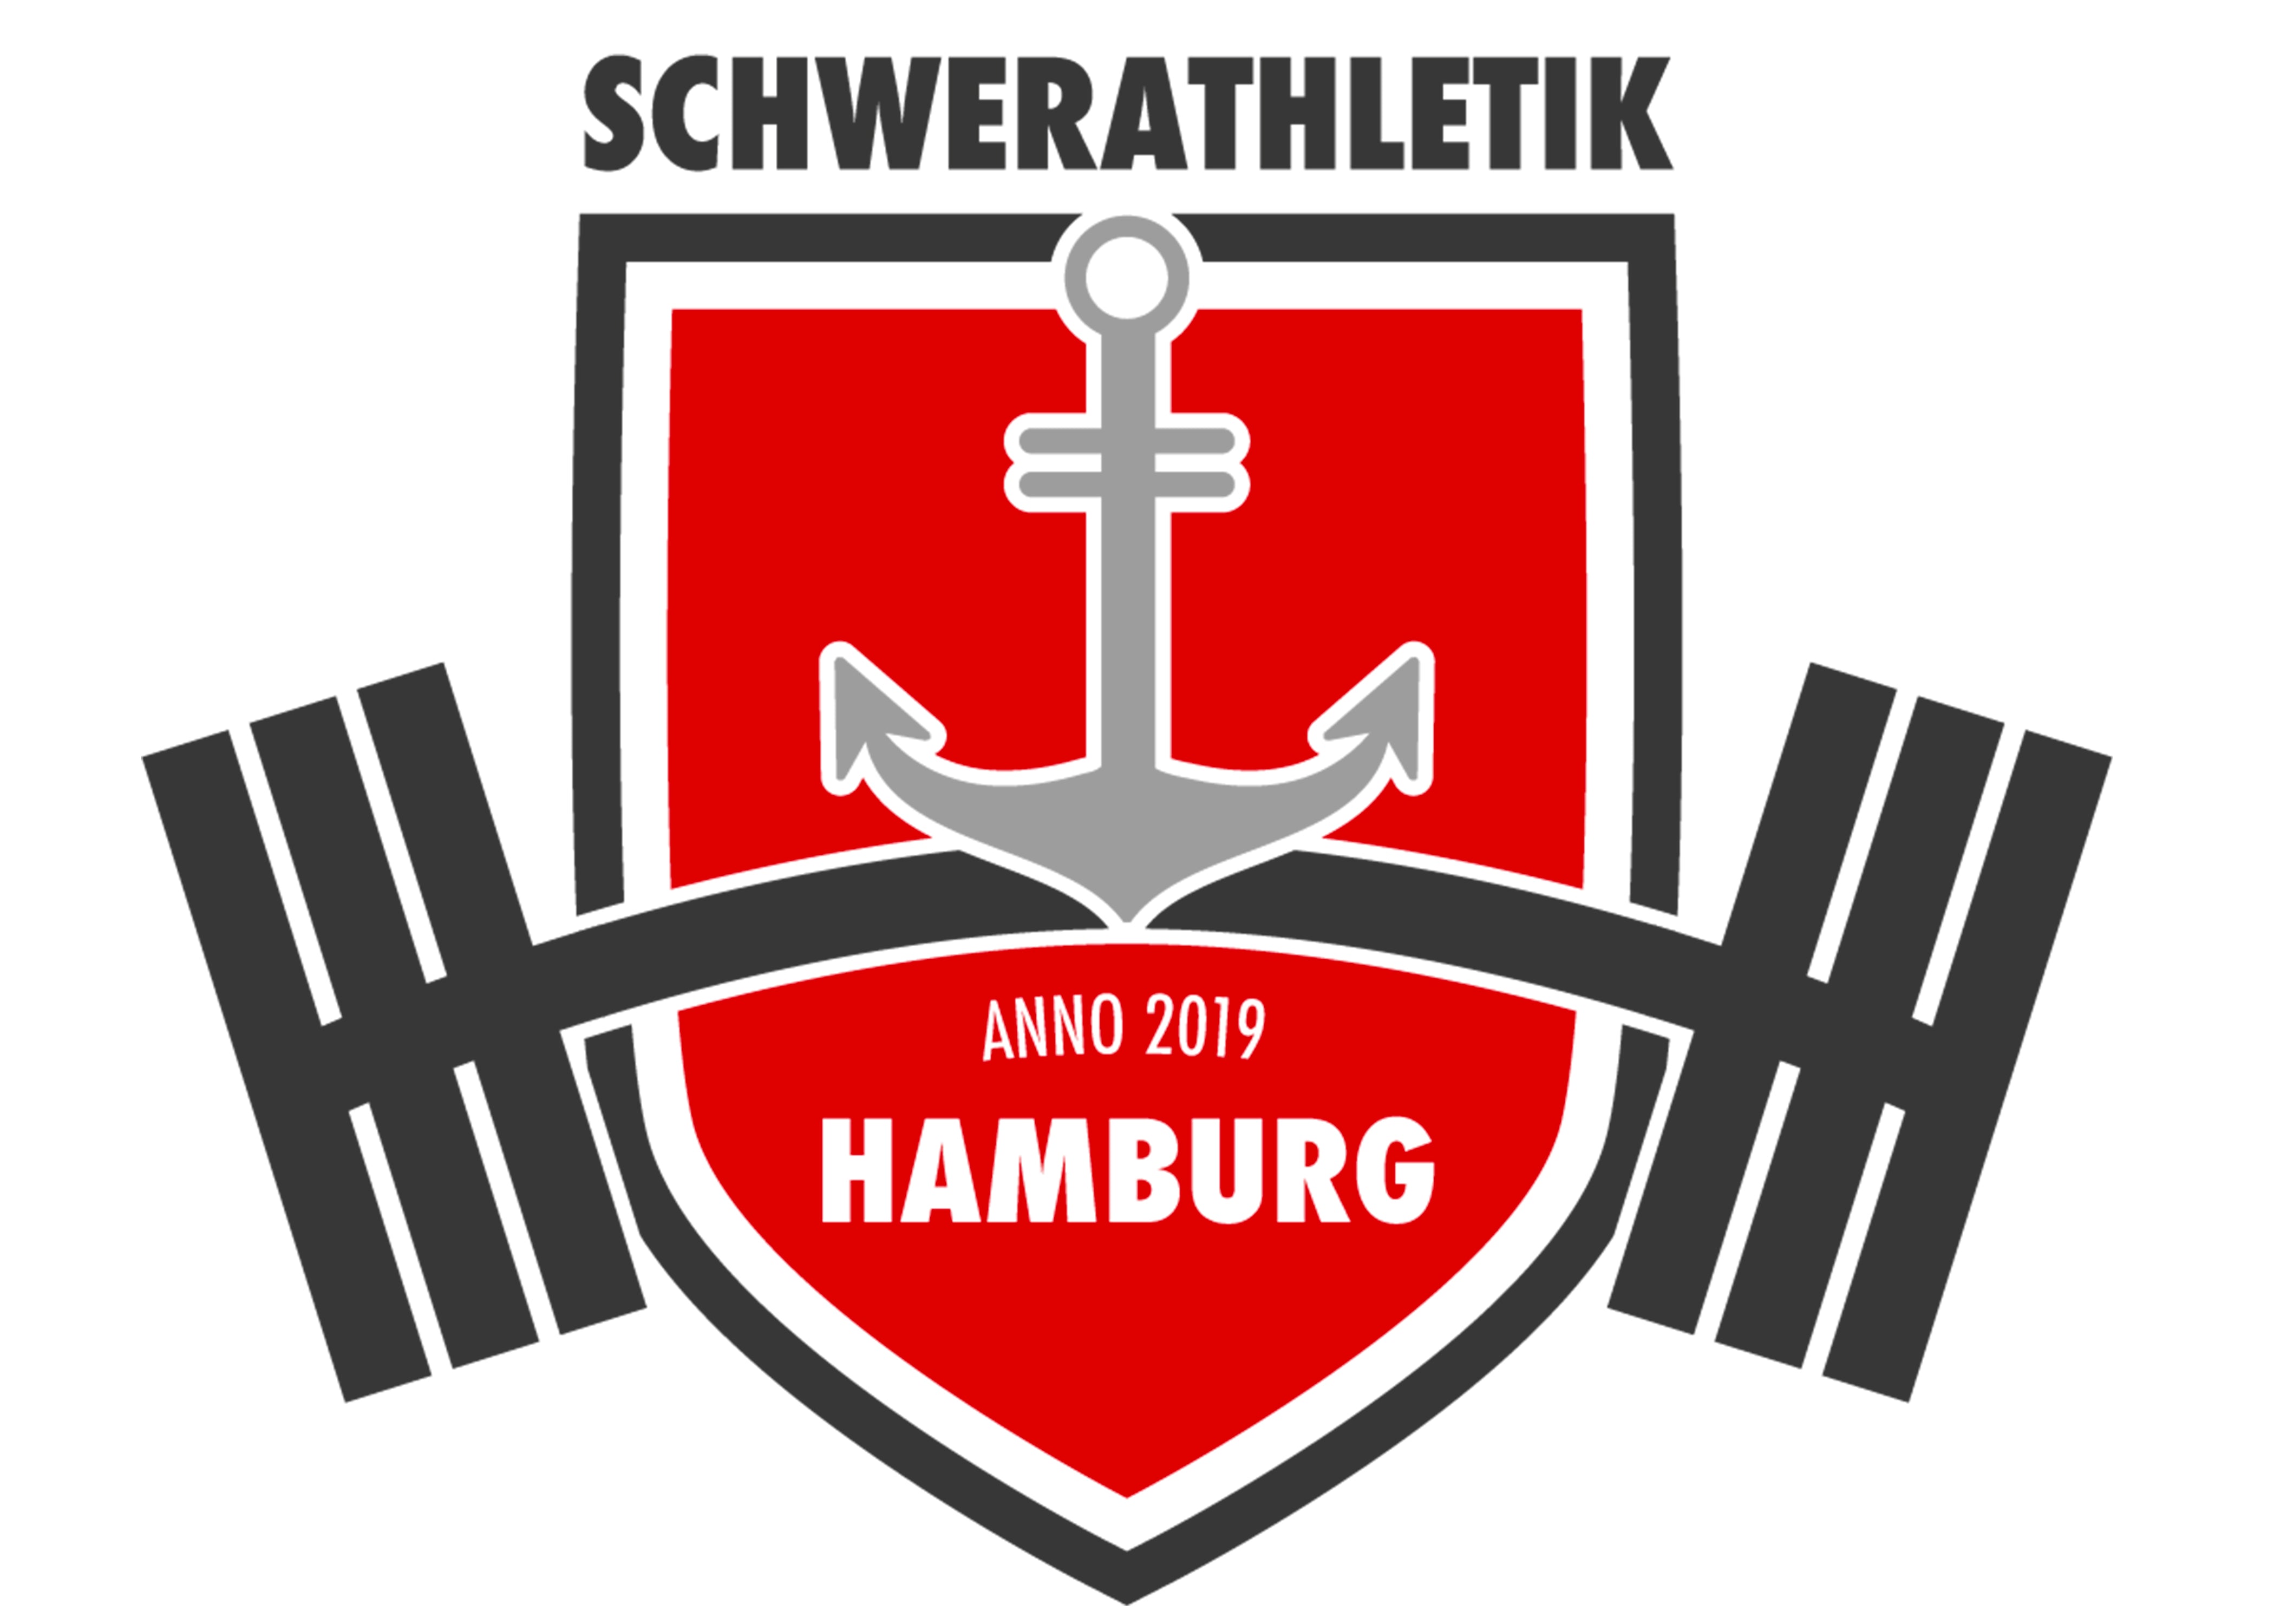 Schwerathletik Hamburg